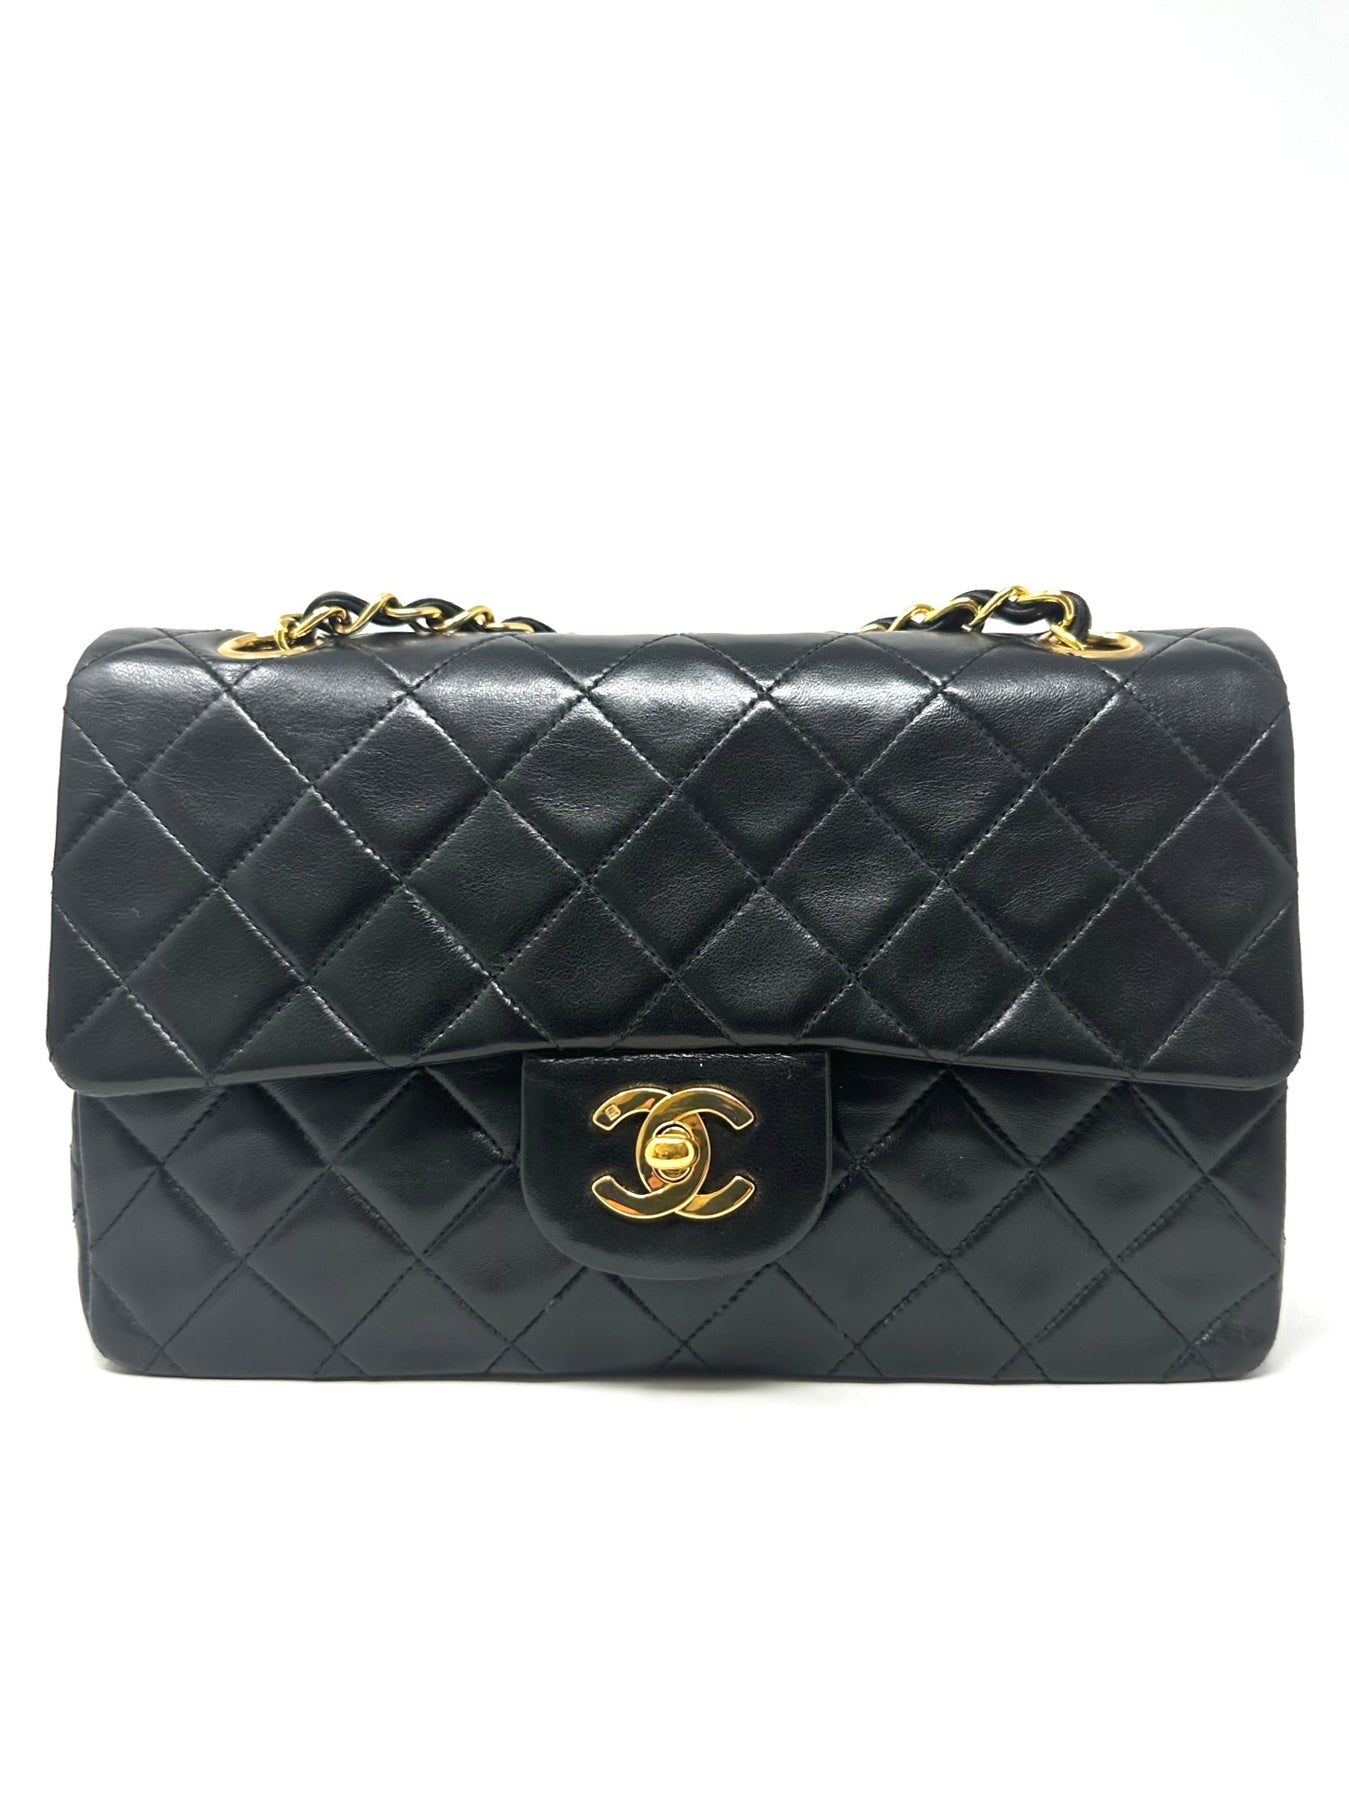 Chanel Small Classic Flap Bag Caviar Black SHW